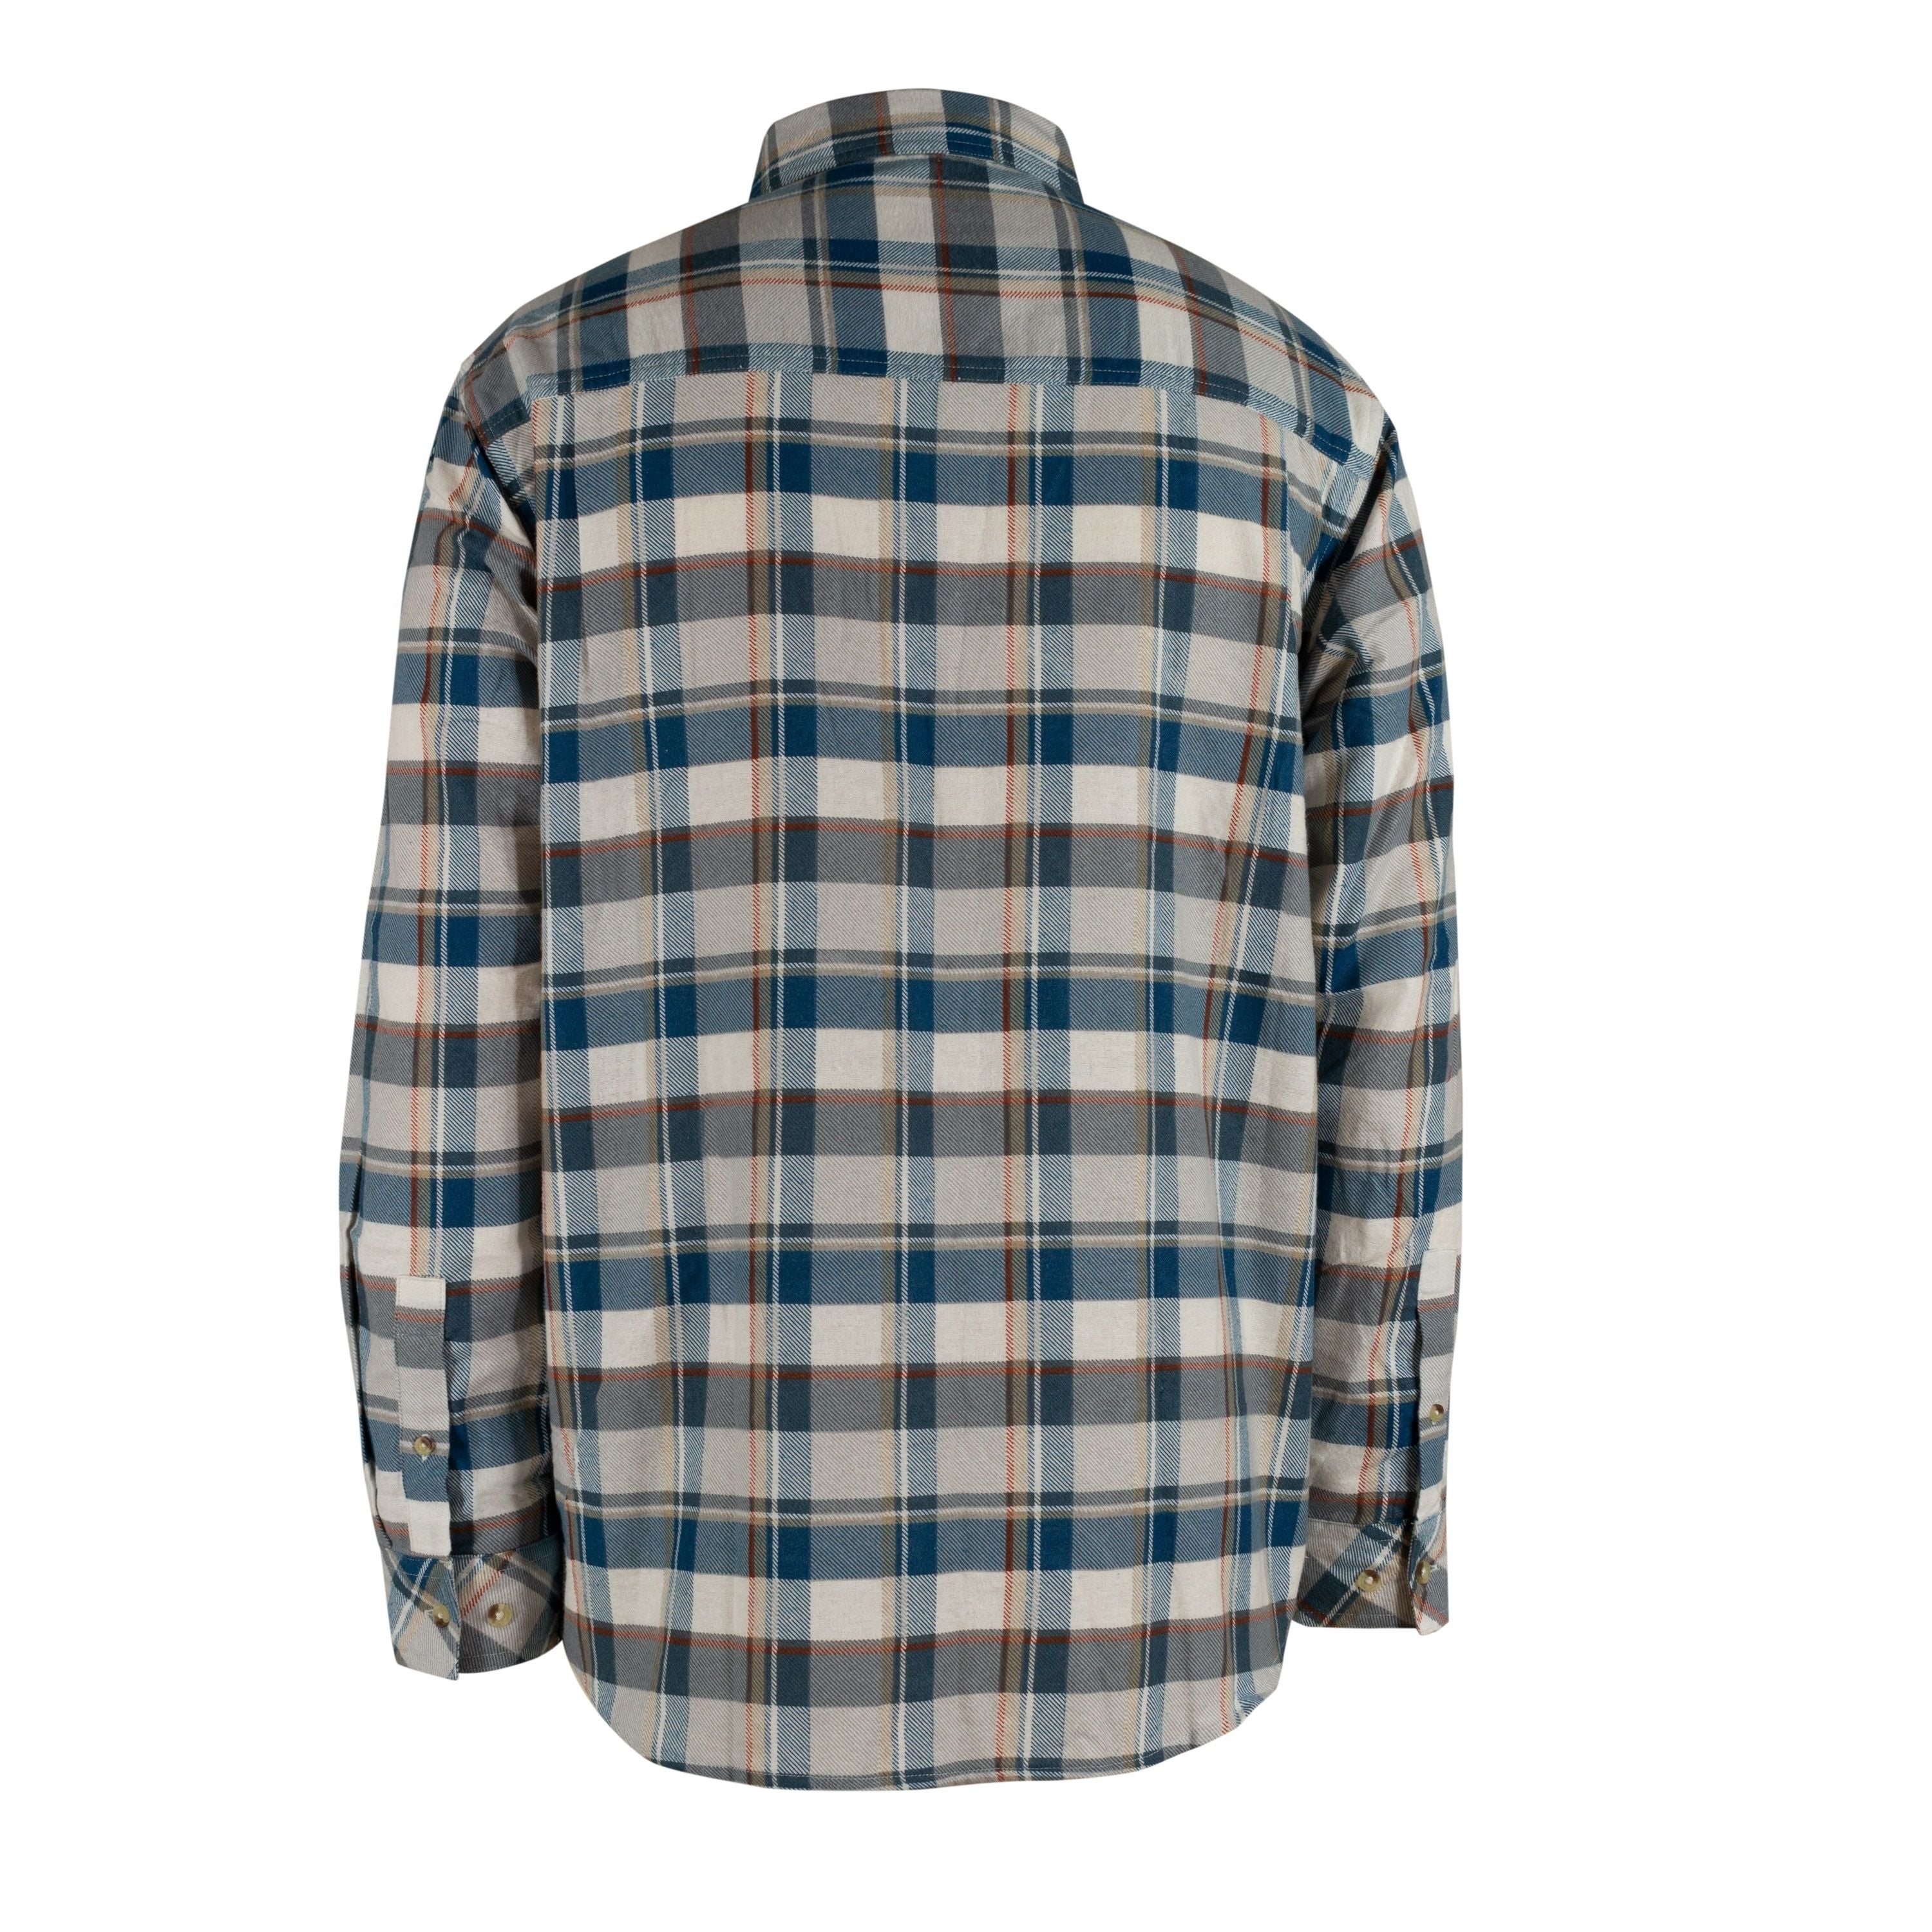 Flannel shirt - Men's